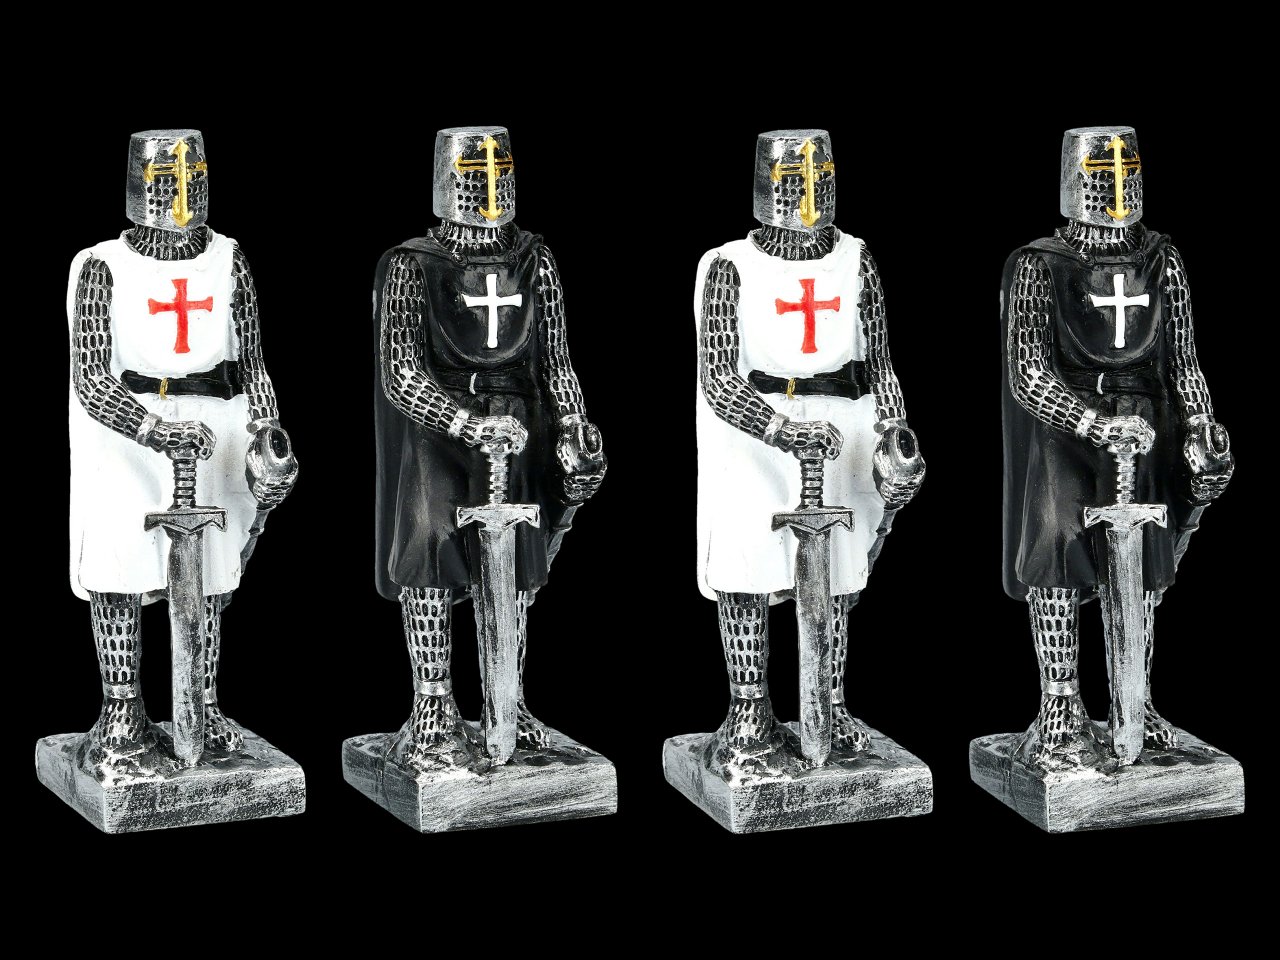 Knight Templar Figurines - Crusaders Set of 4